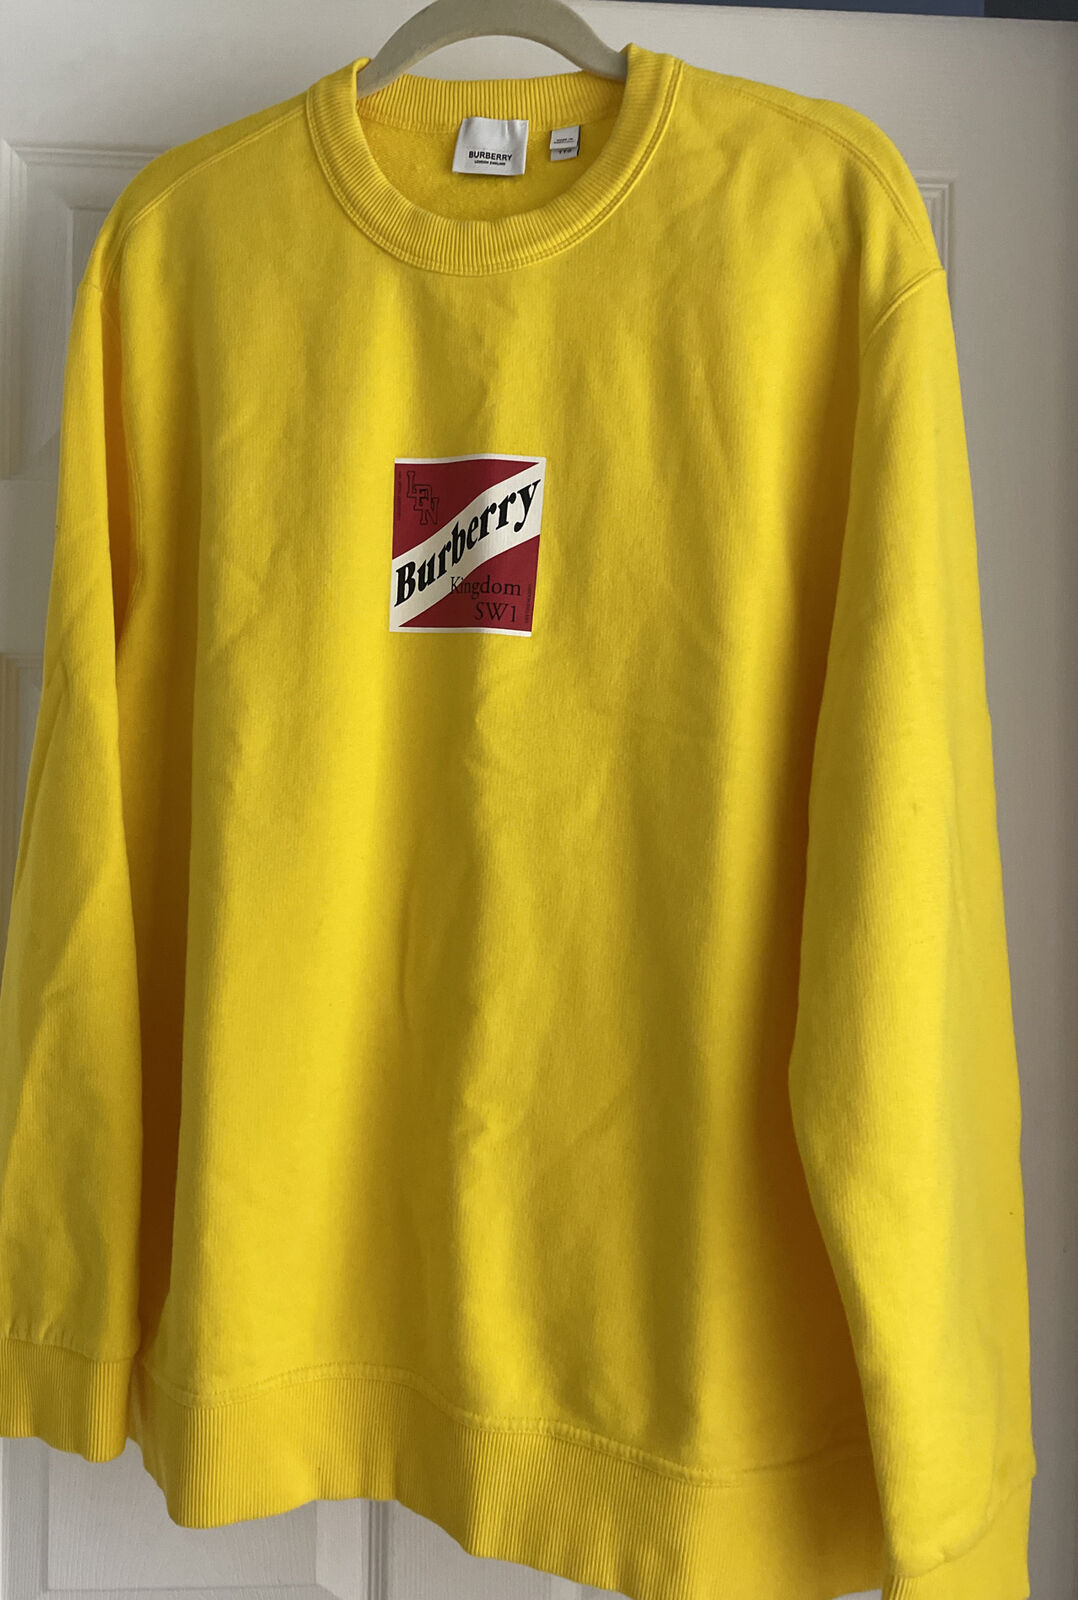 Burberry Yellow sweatshirt. Authentic and unique.… - image 1